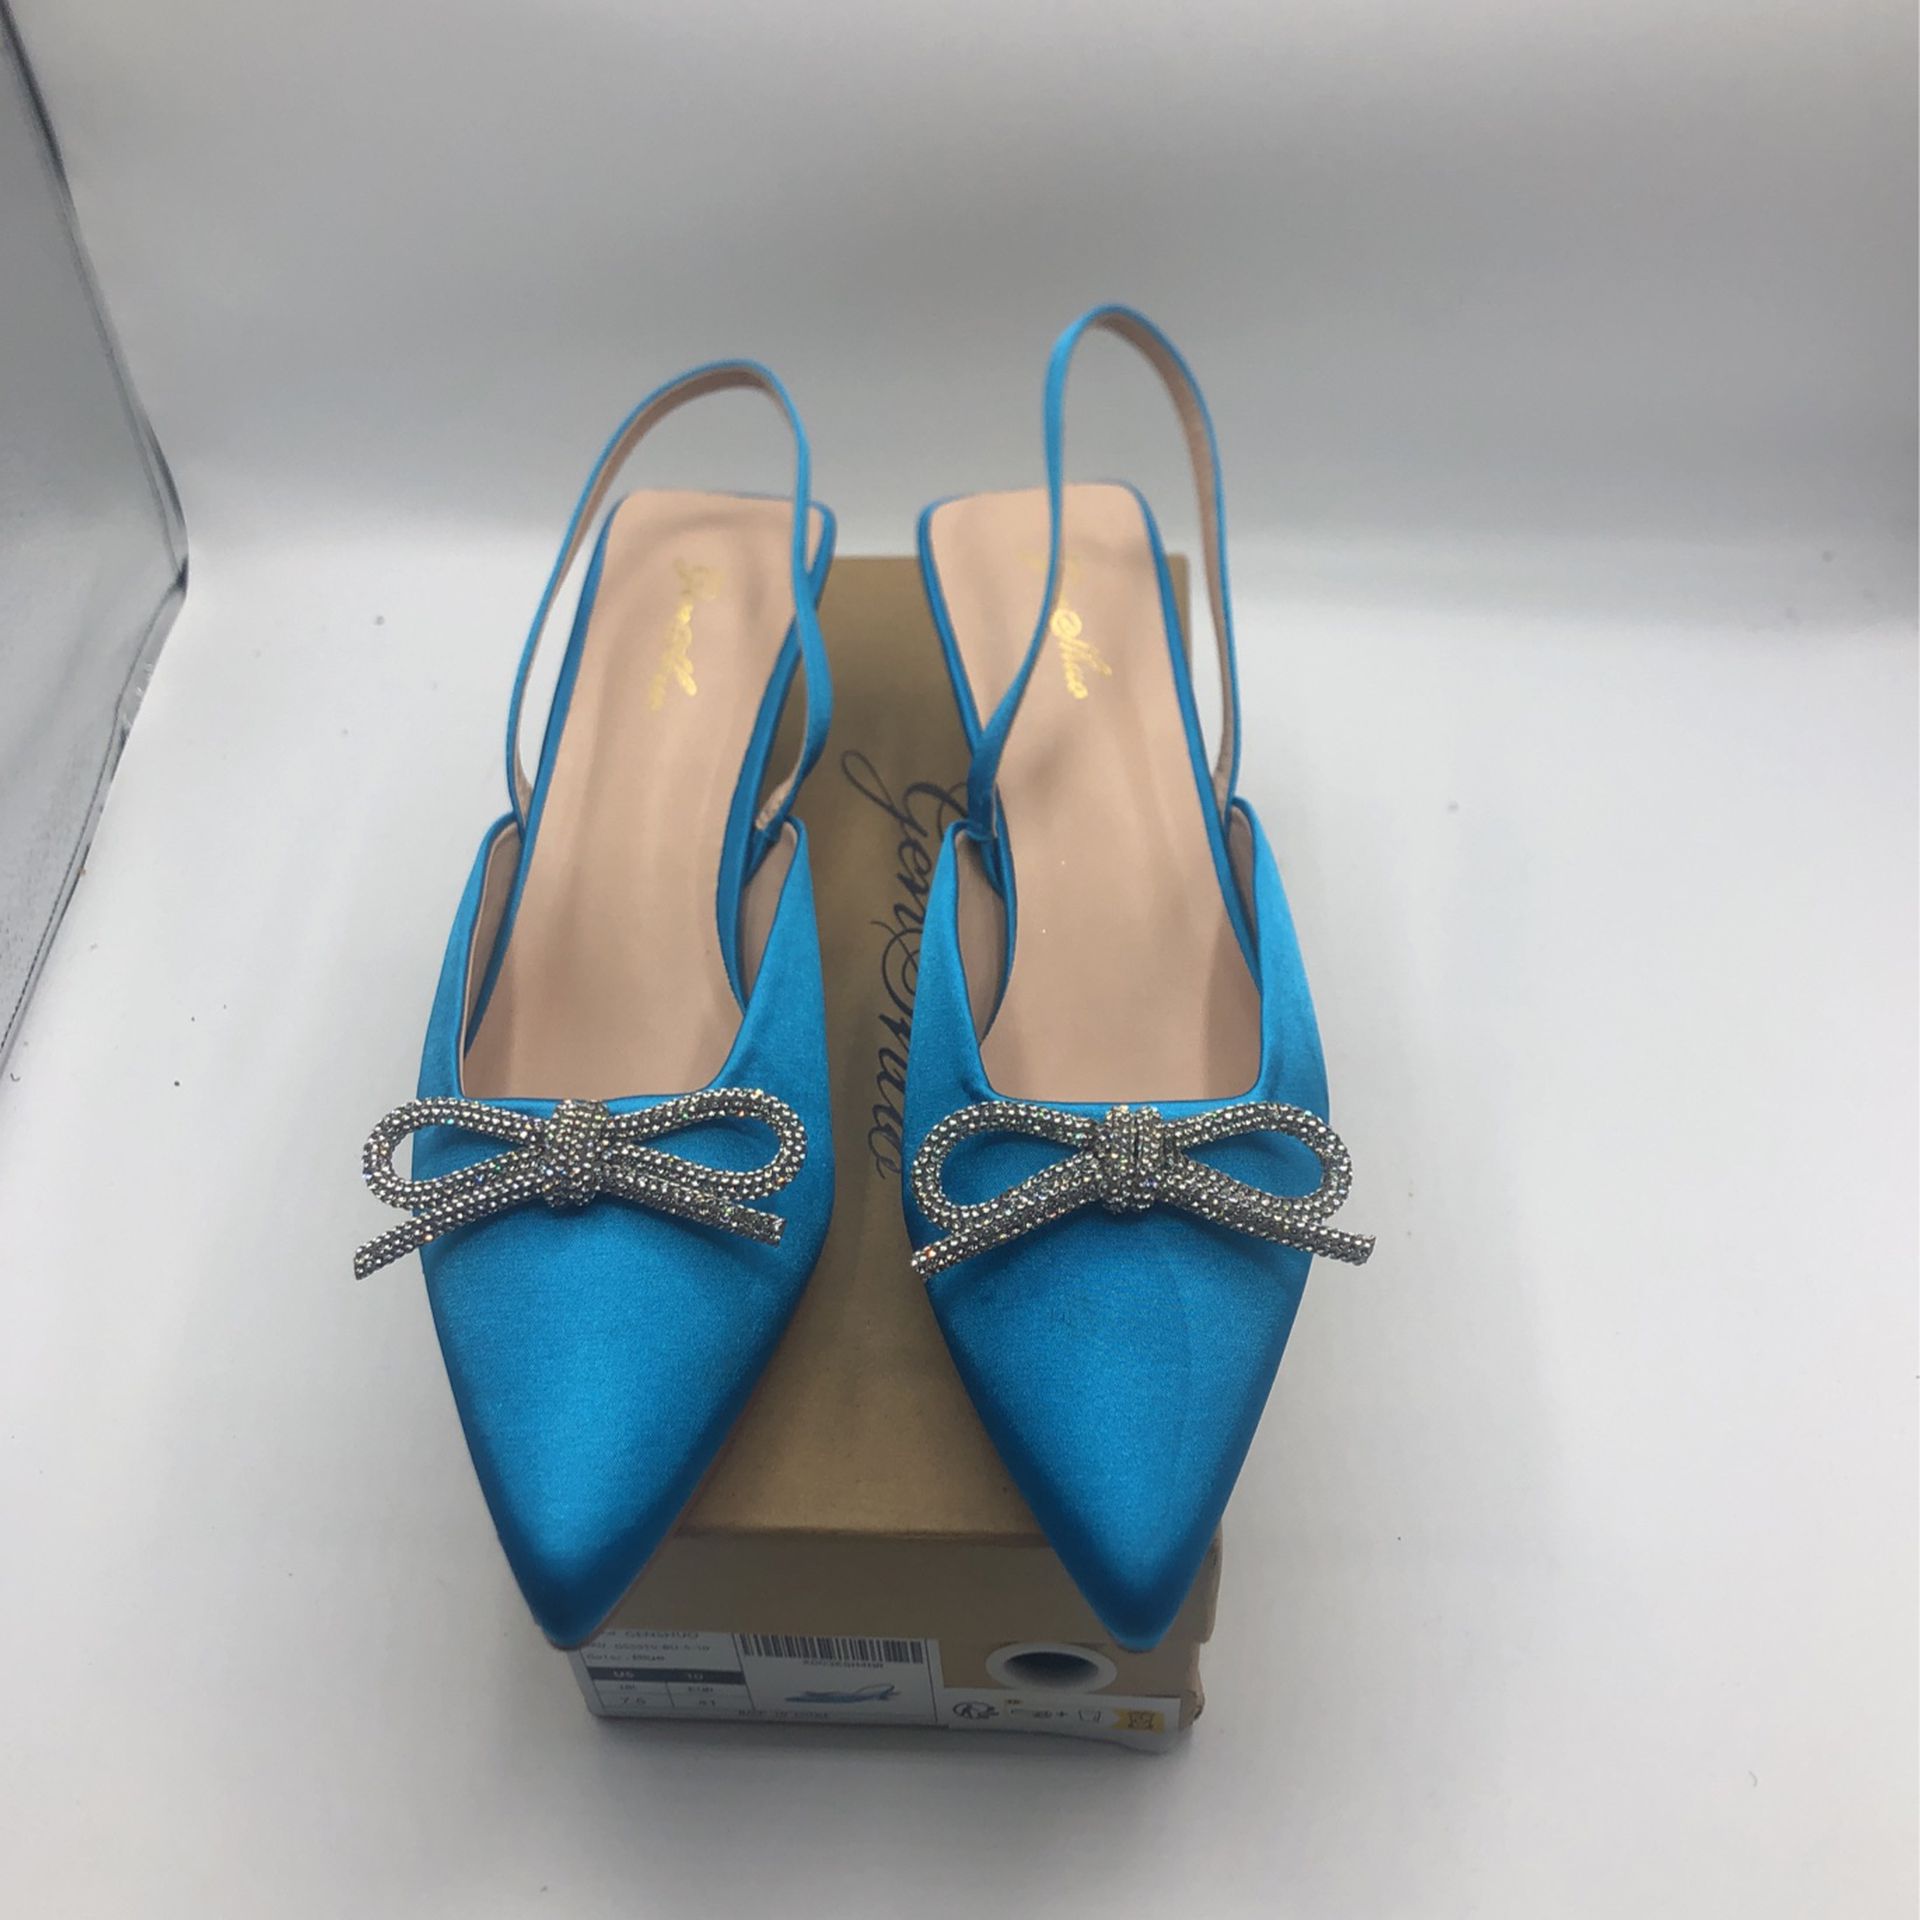 GENSHUO Shoes Women’s Blue Crystal Embellishments Size Pumps Heels 10 US